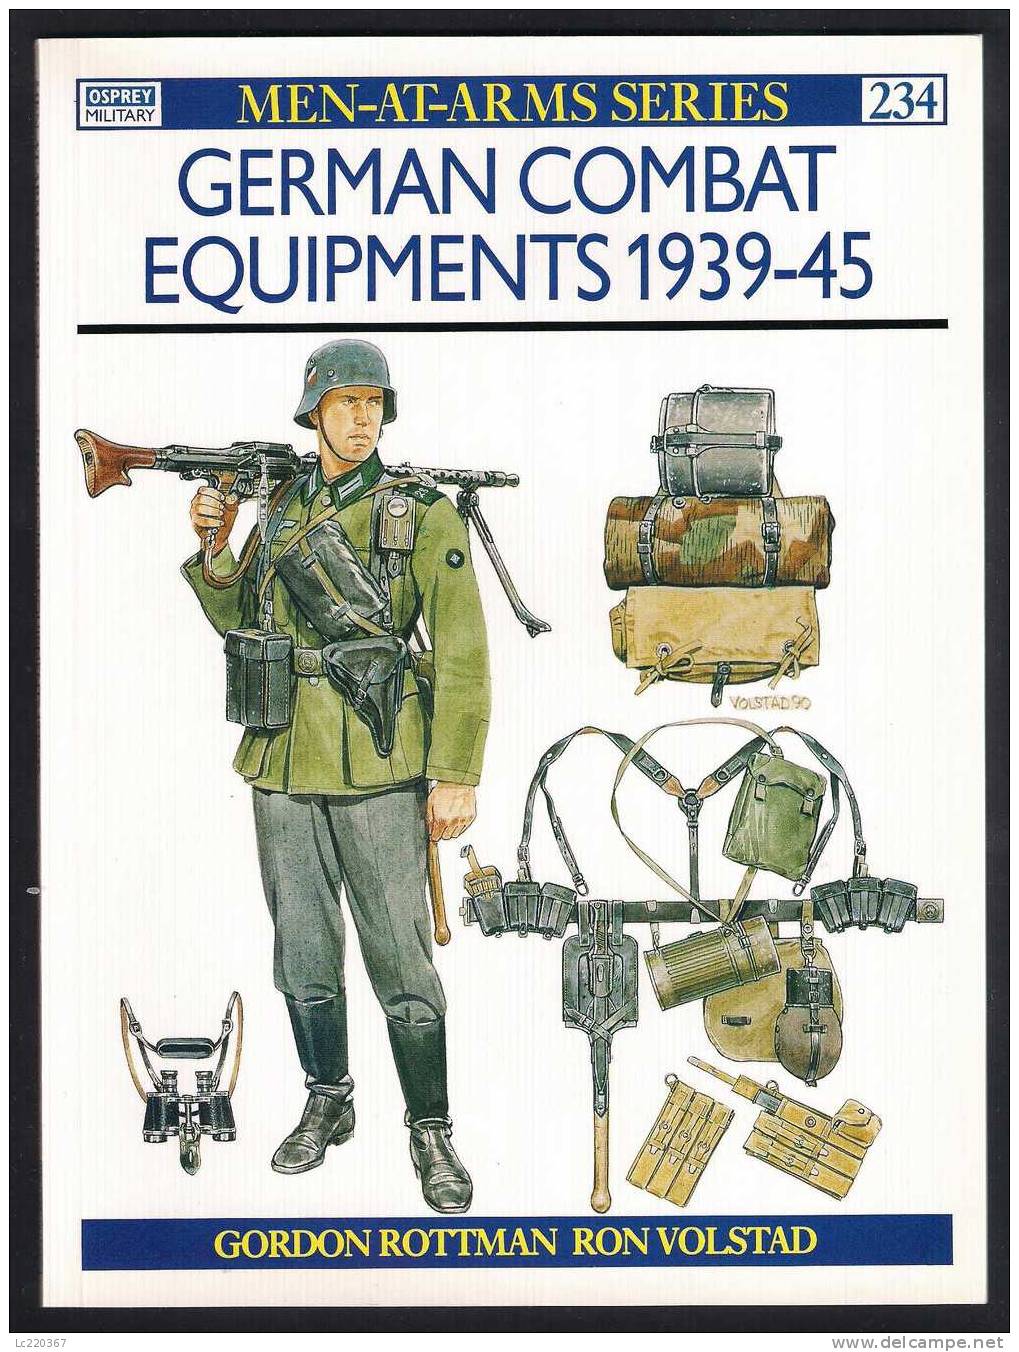 OSPREY MILITARY MEN-AT-ARMS SERIES NR.234 GERMAN COMBAT EQUIPMENTS 1939-45 GORDON ROTTMAN ISBN 0-85045-952-4 - English